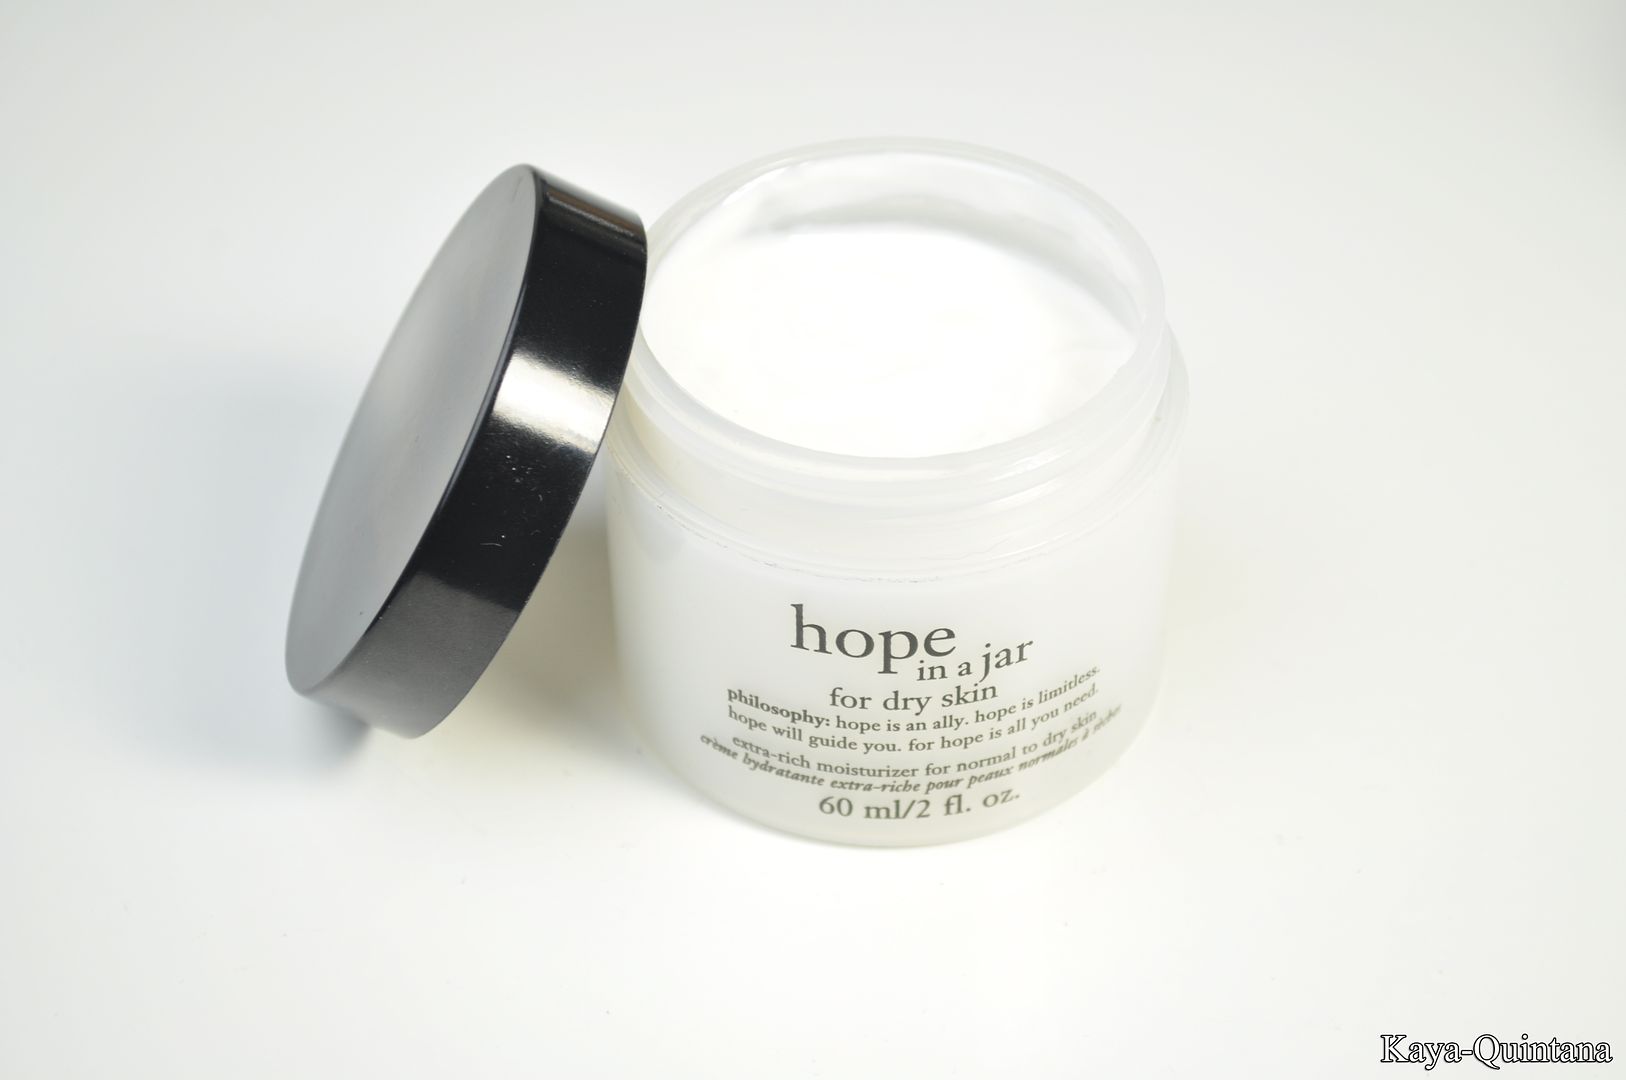 hope in a jar voor droge huid review